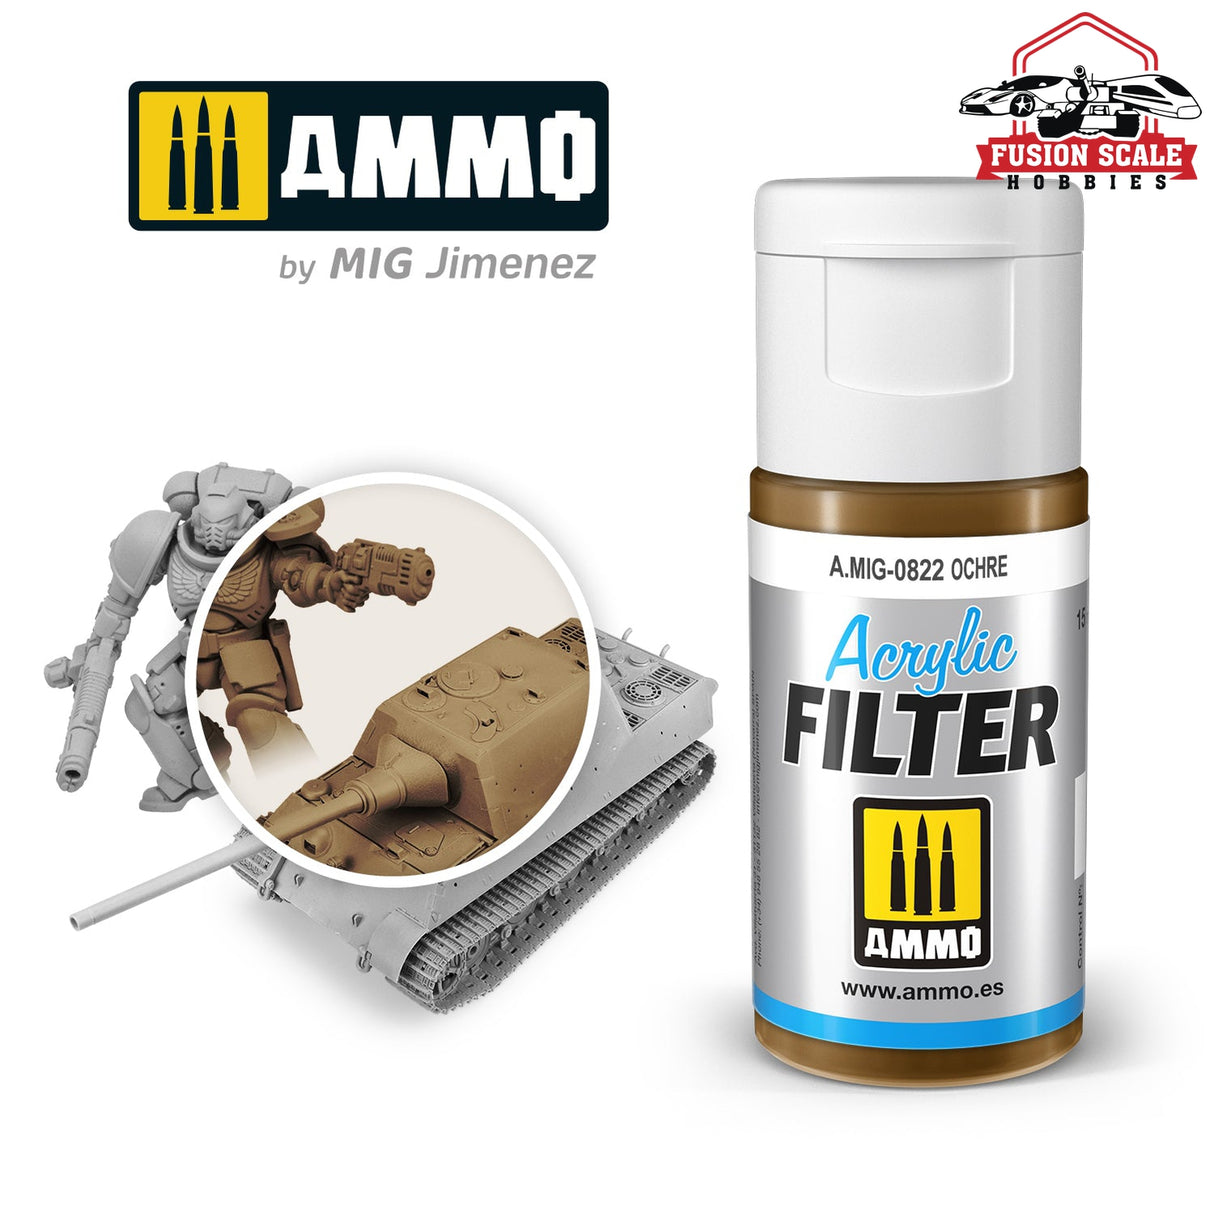 Ammo Mig Jimenez Acrylic Filter Ocher - Fusion Scale Hobbies